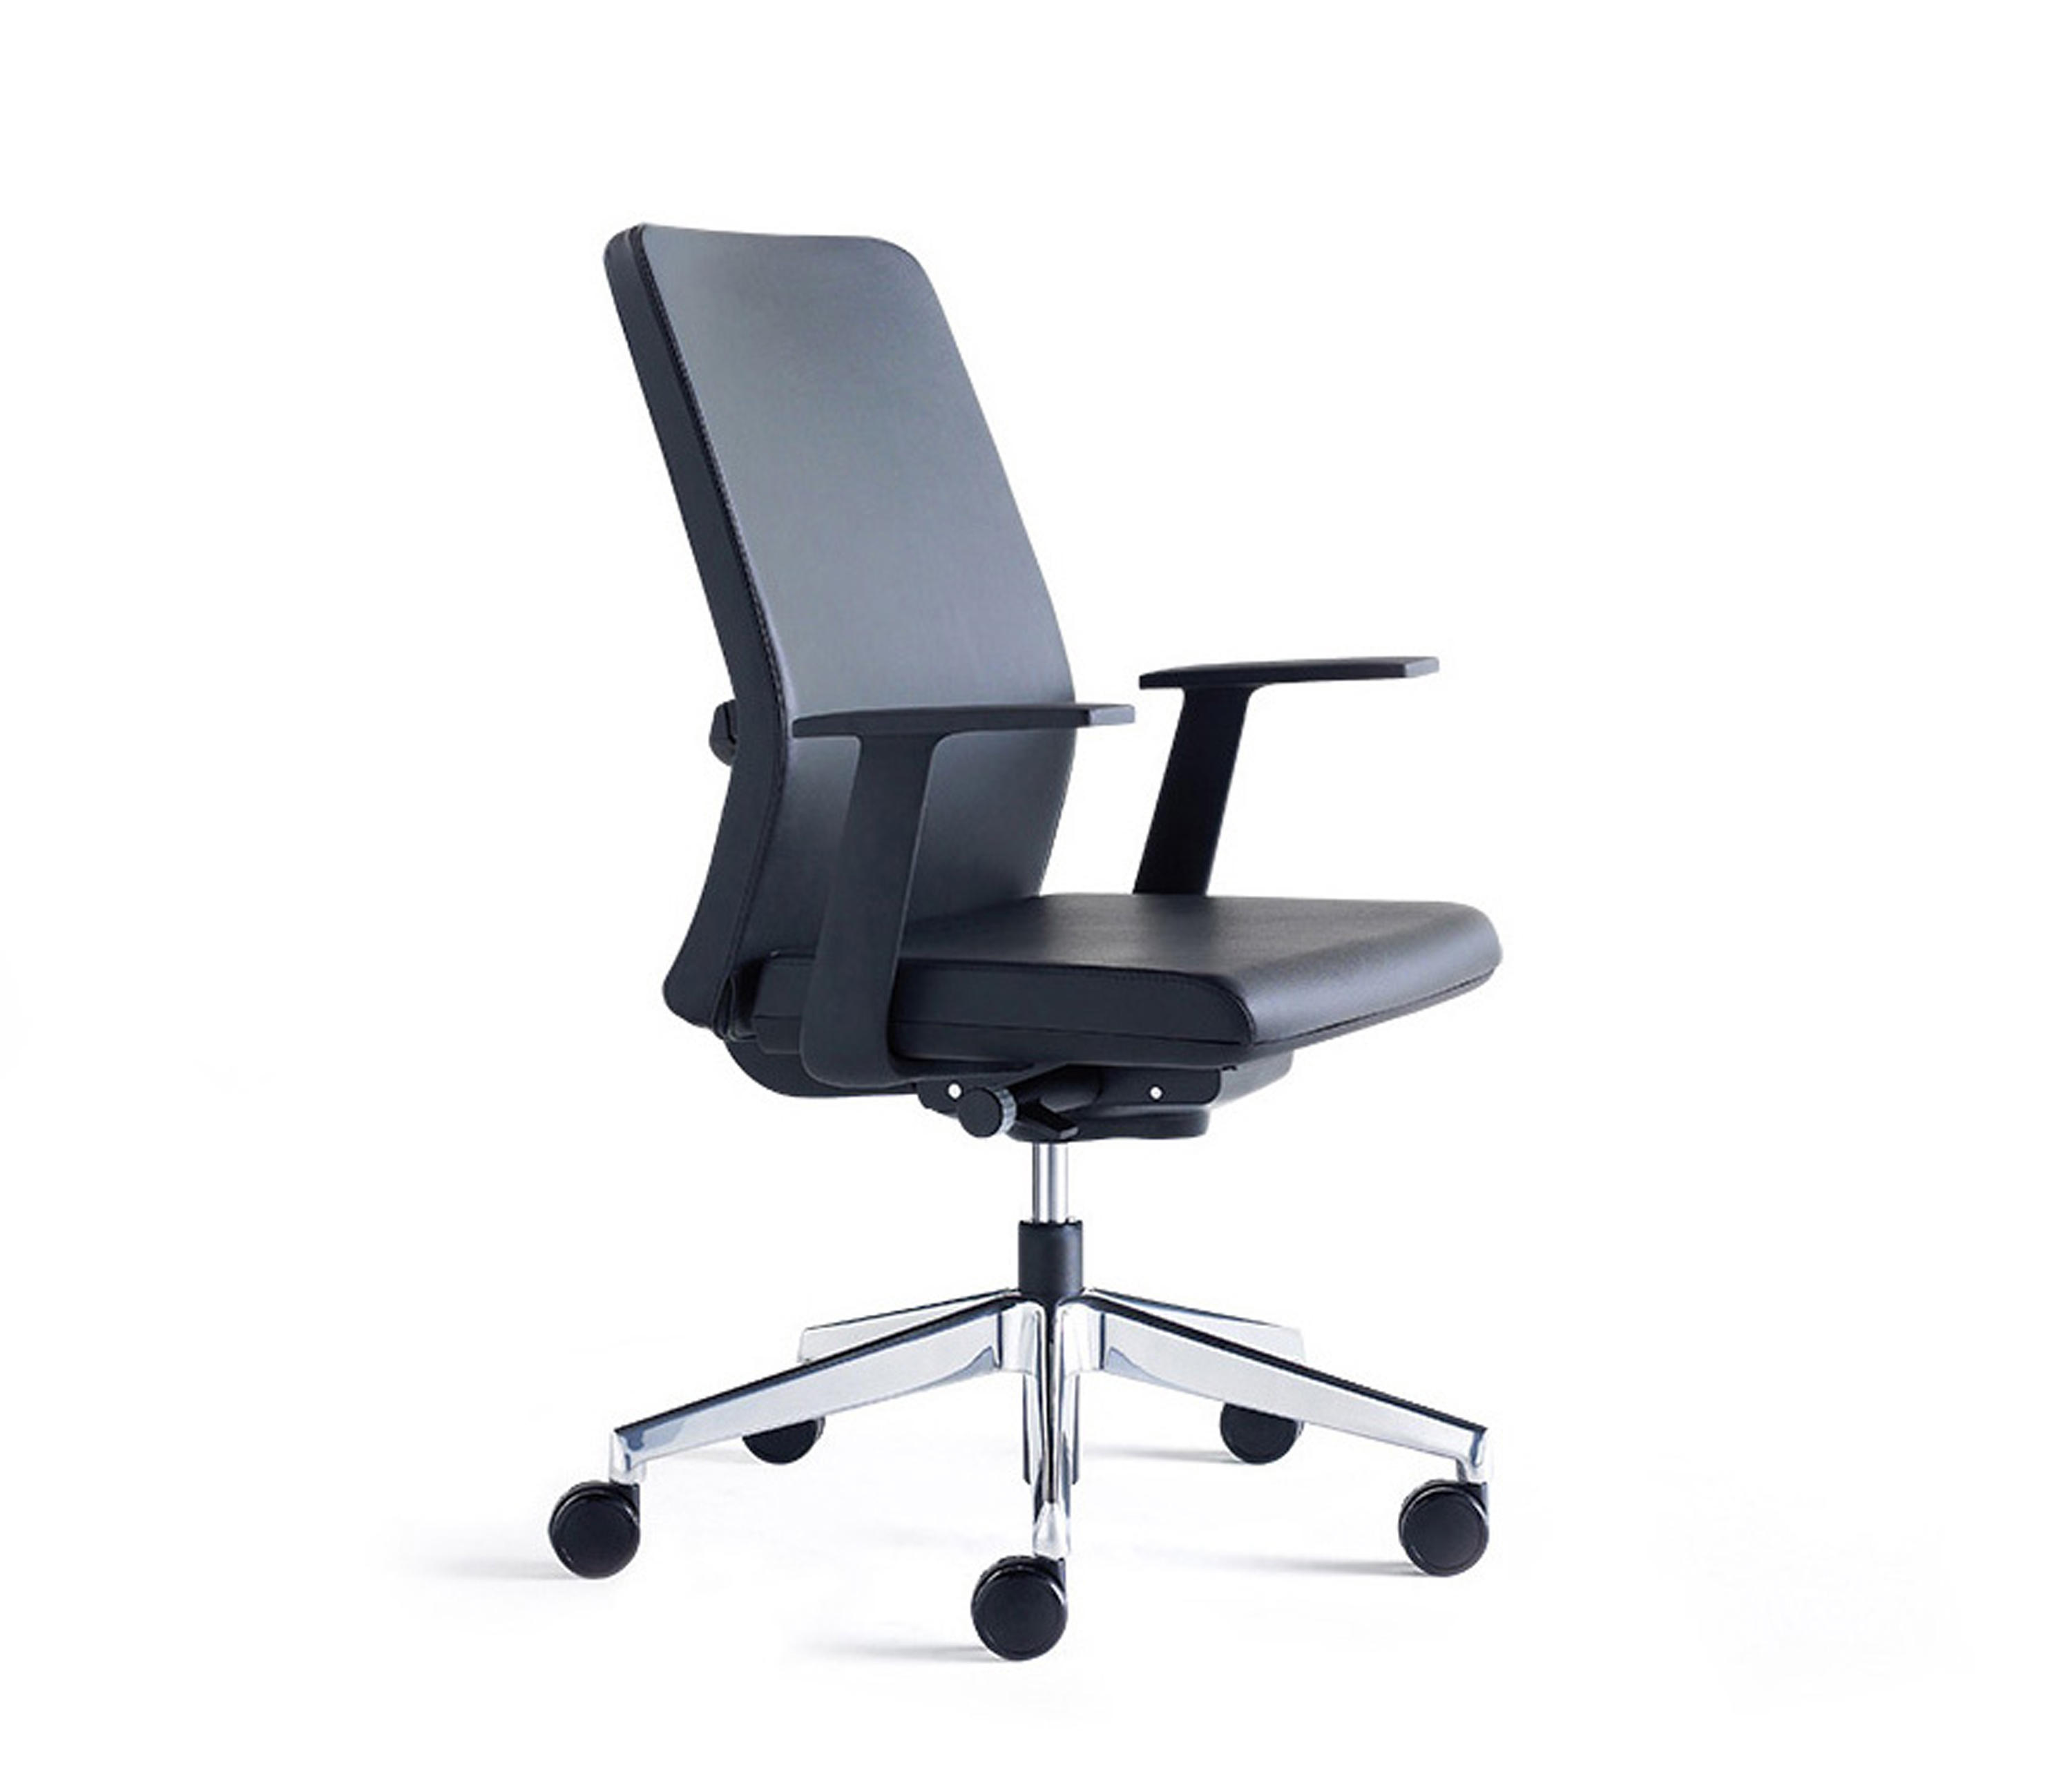 Movado Office Chair by Enea